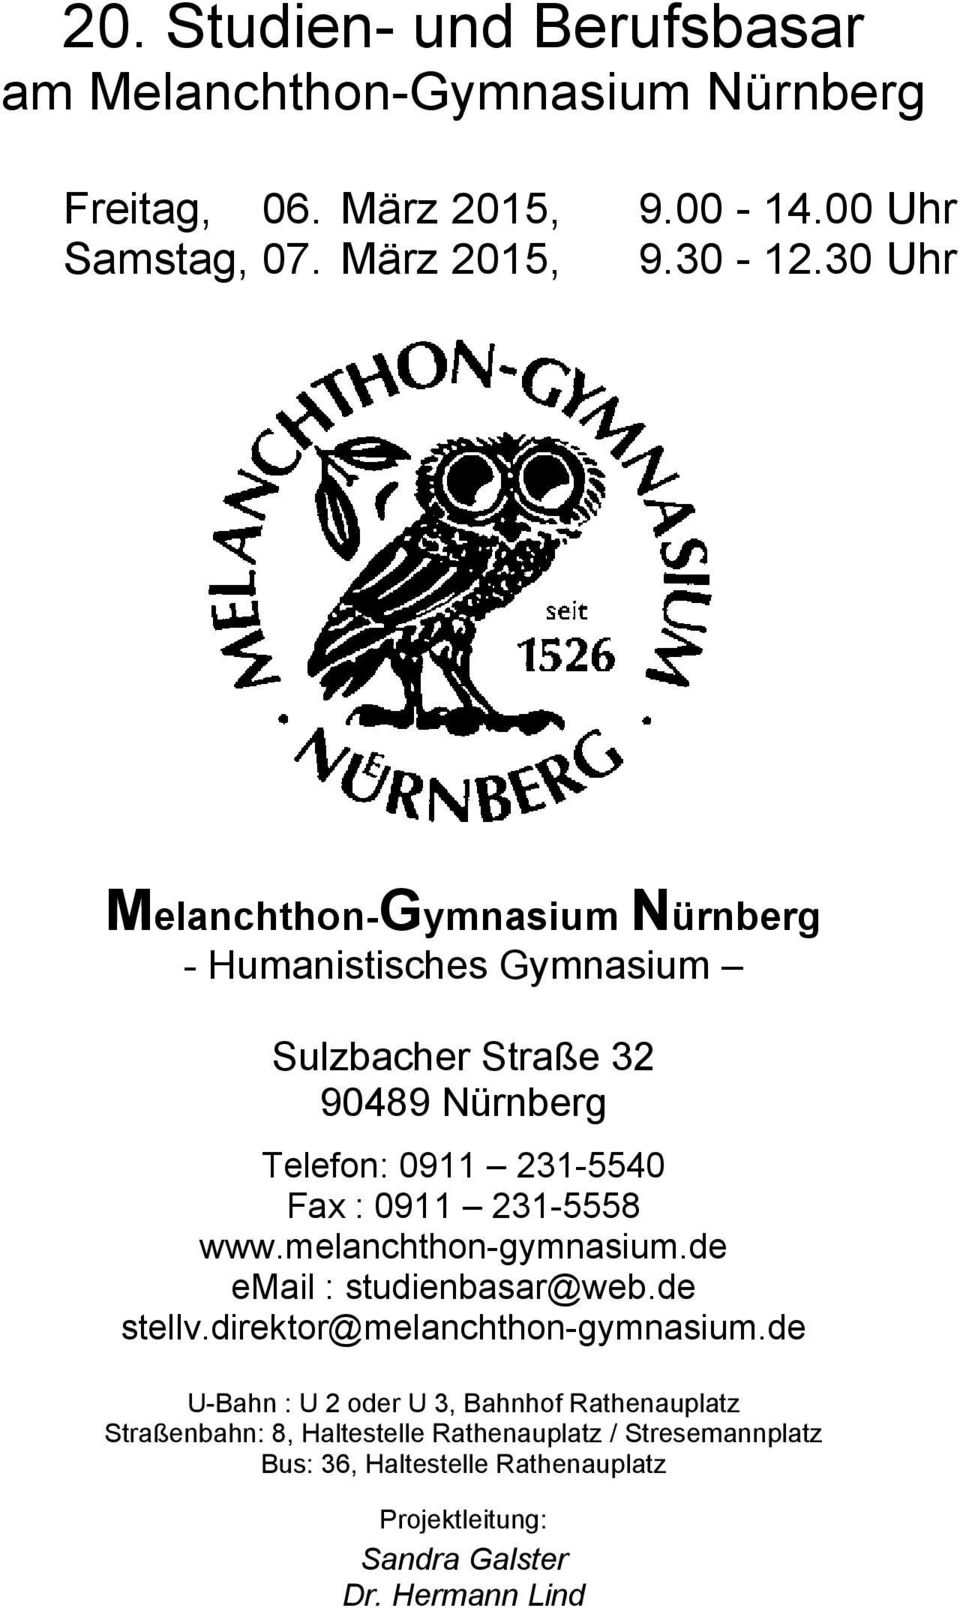 231-5558 www.melanchthon-gymnasium.de email : studienbasar@web.de stellv.direktor@melanchthon-gymnasium.